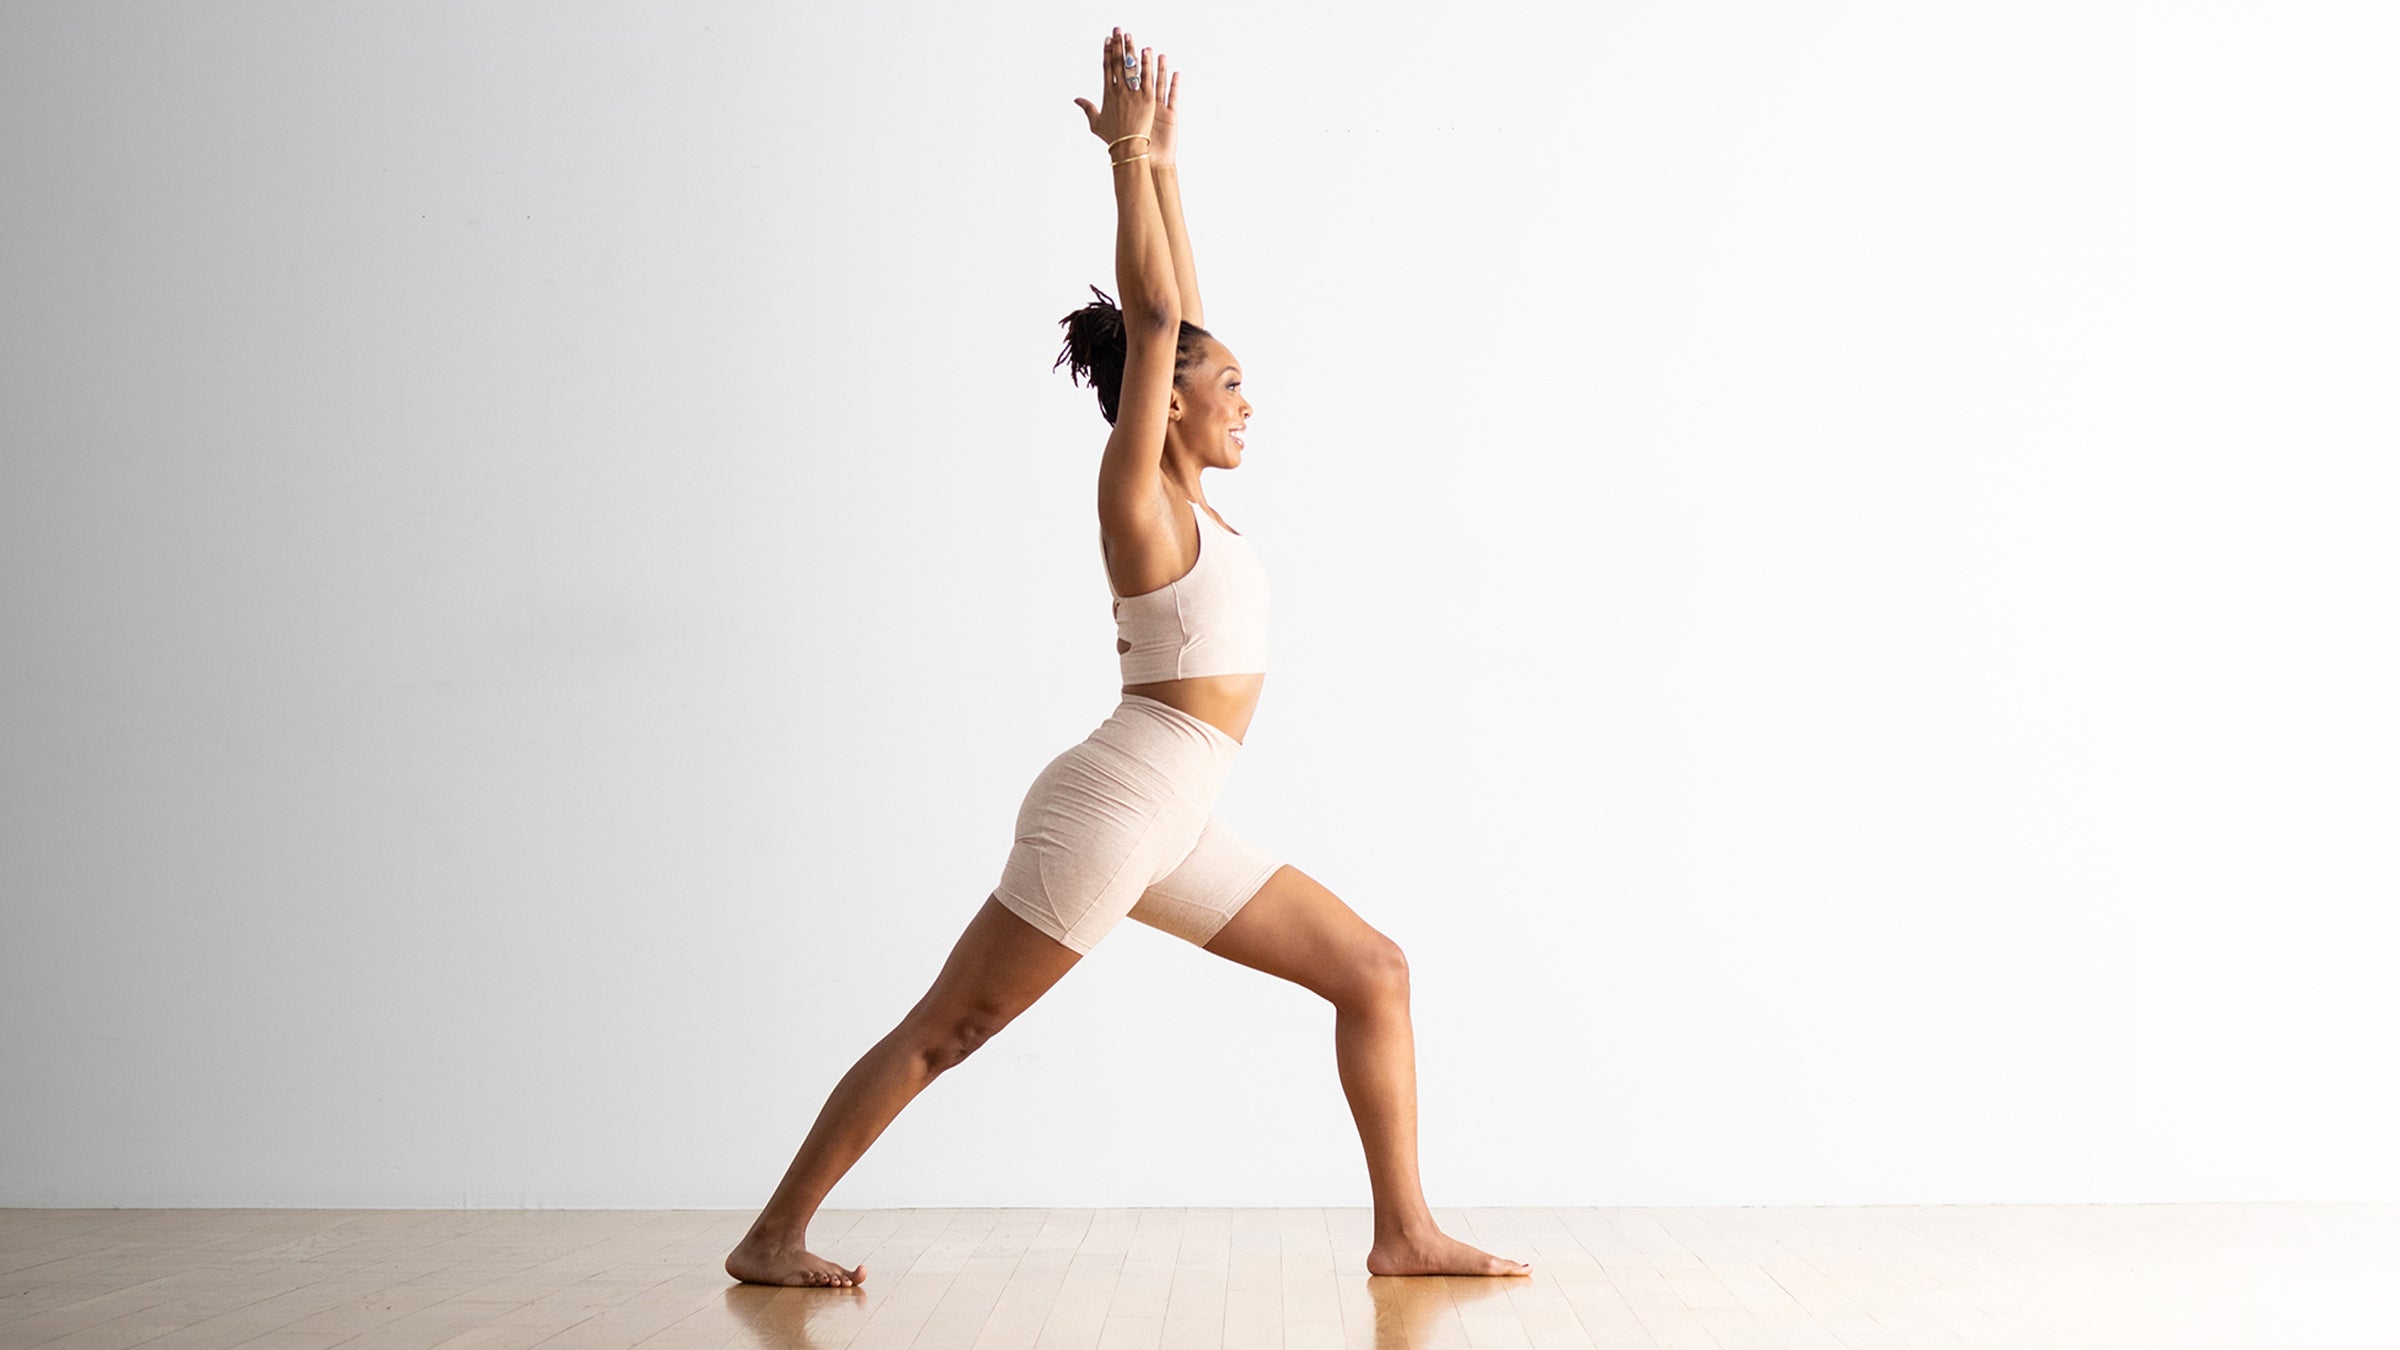 16 Yoga Poses To Ignite Your Feminine Energy - YOGA PRACTICE